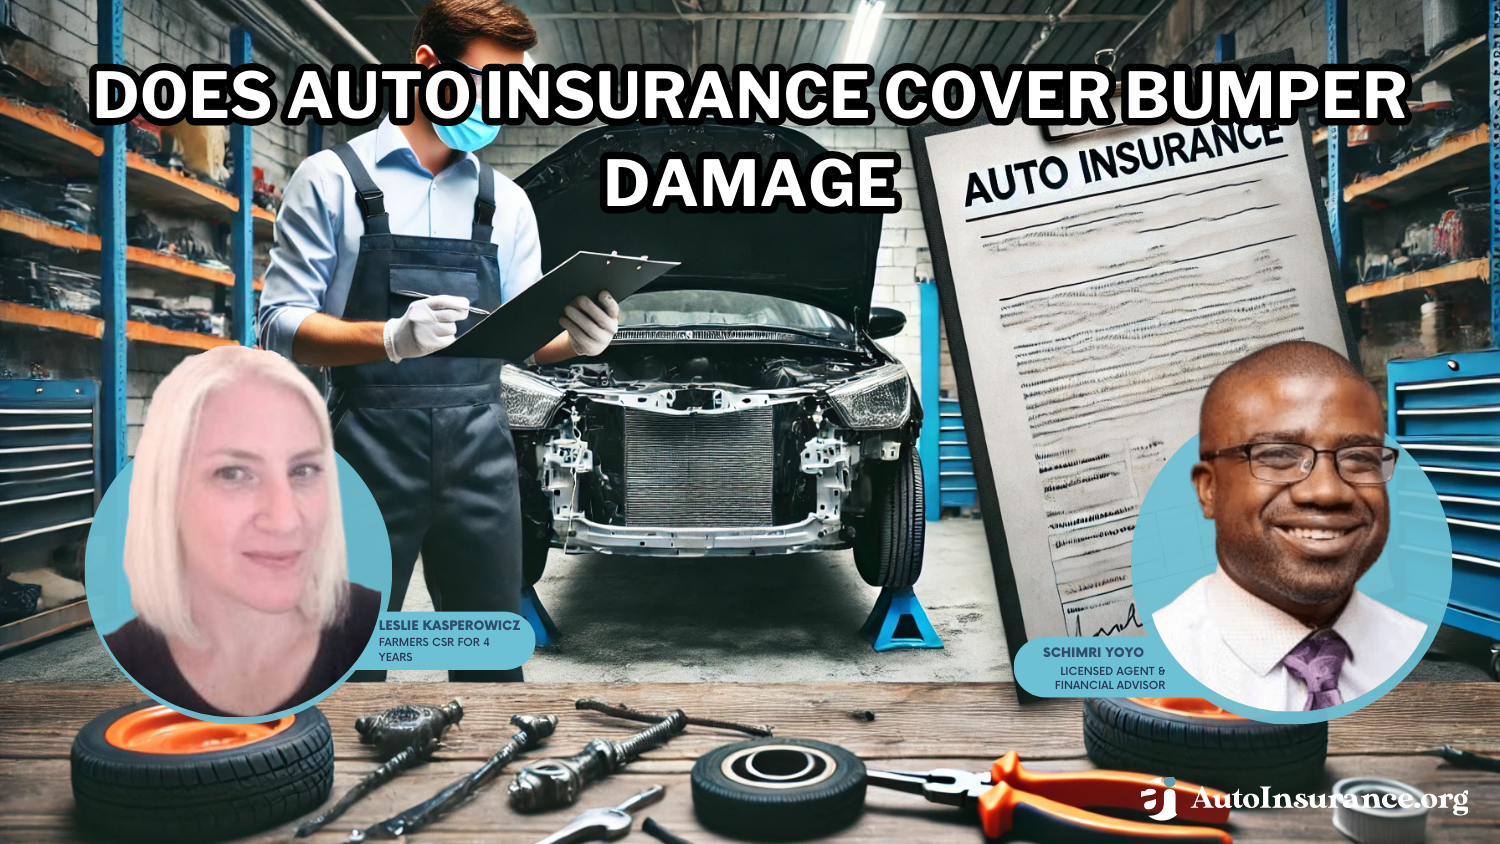 Does auto insurance cover bumper damage?